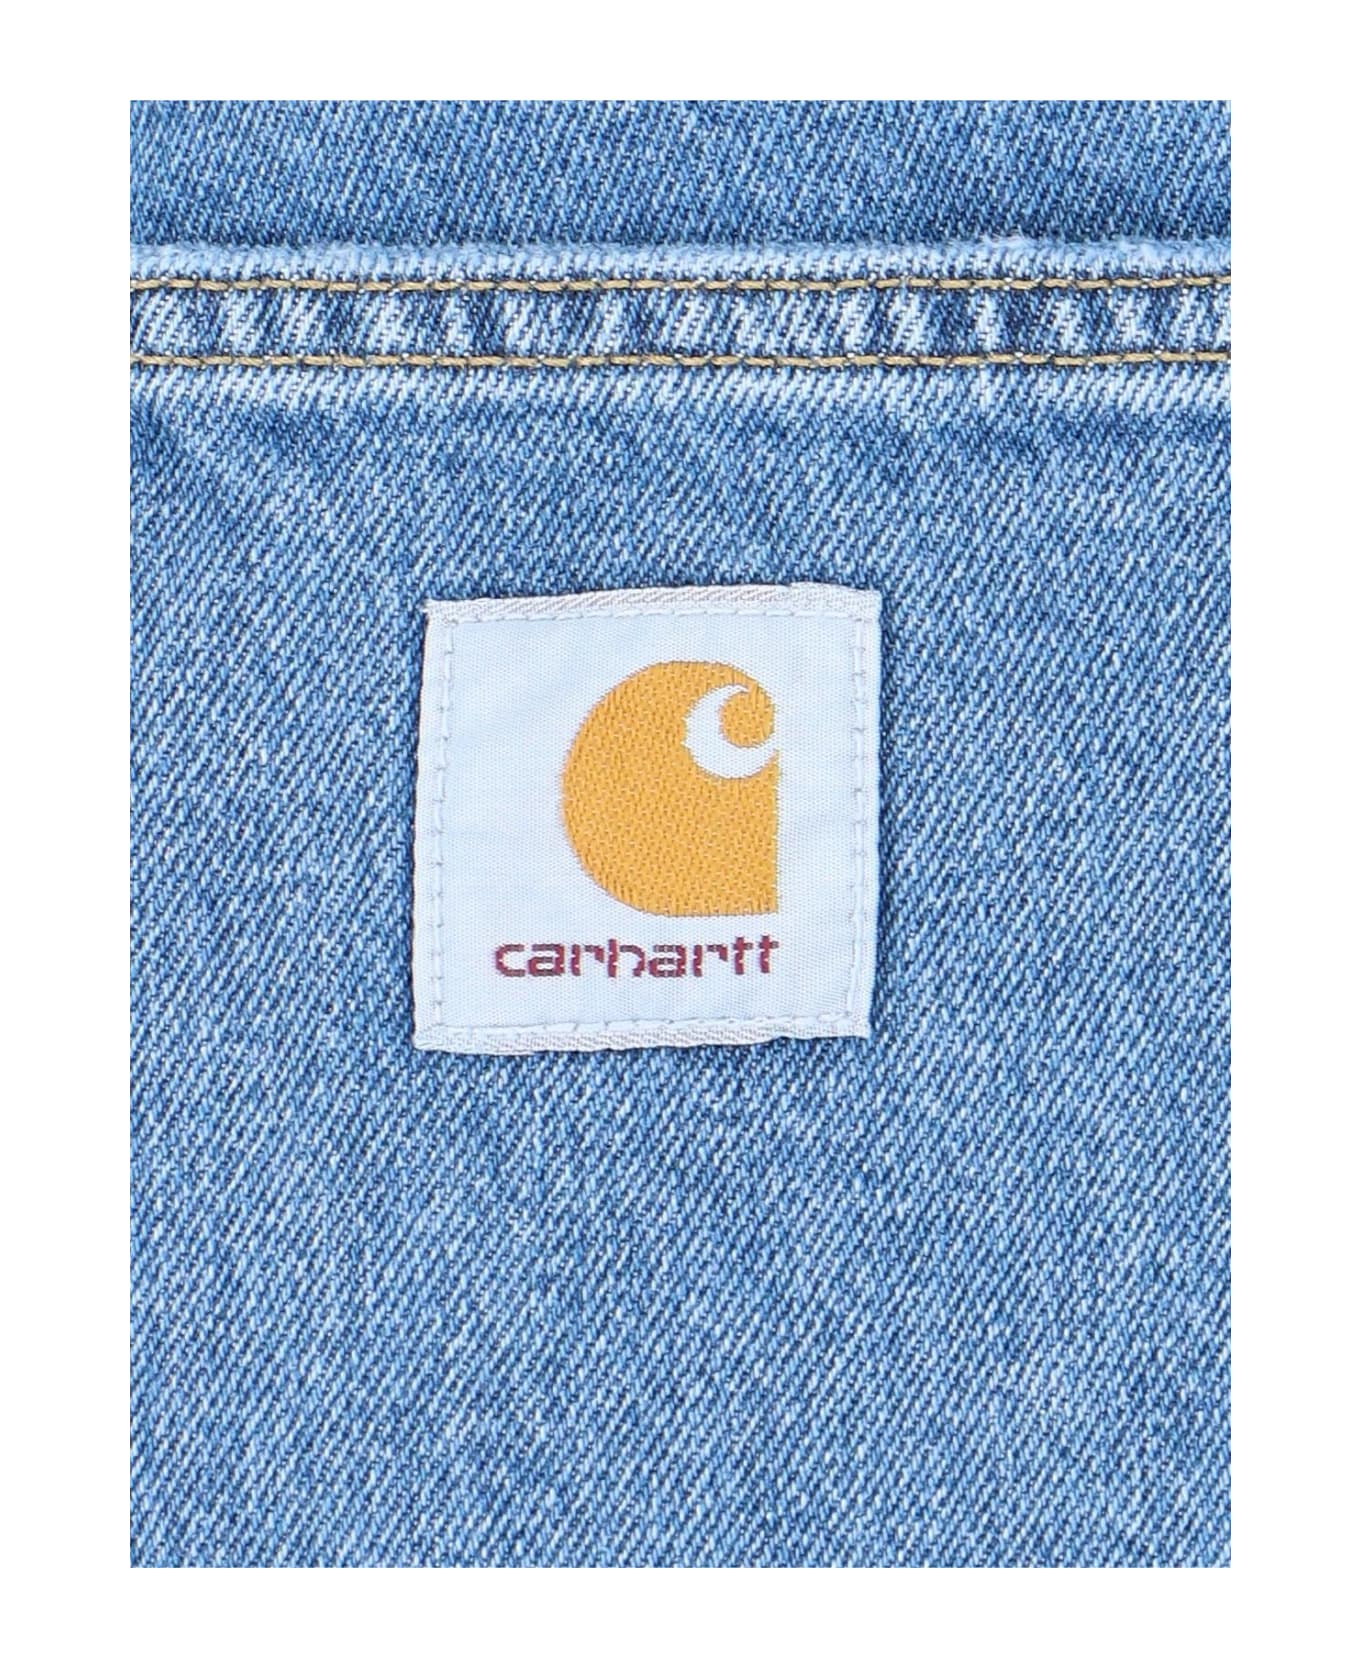 Carhartt Landon Jeans - Denim